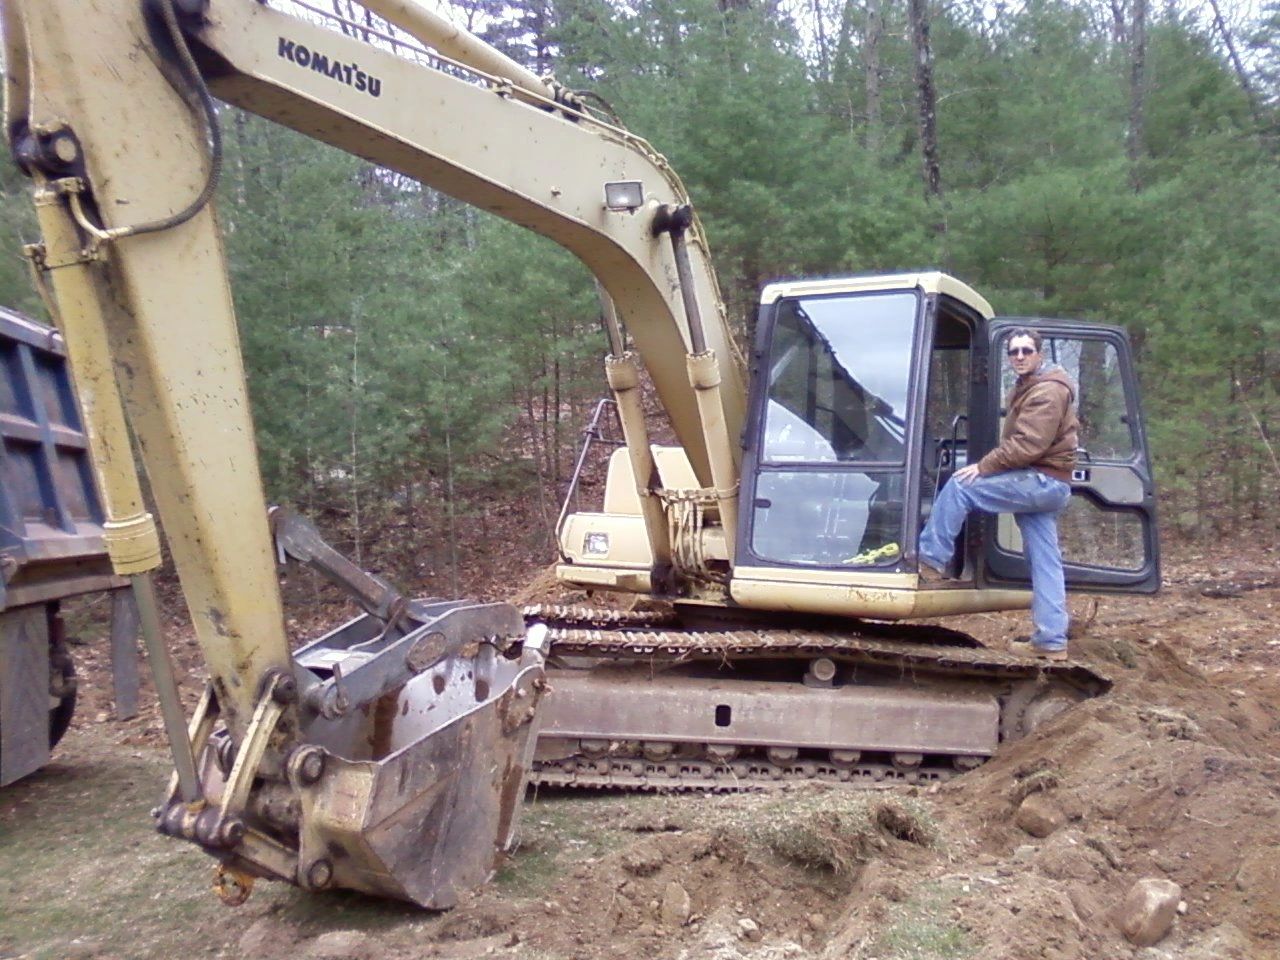 Phil's Excavating